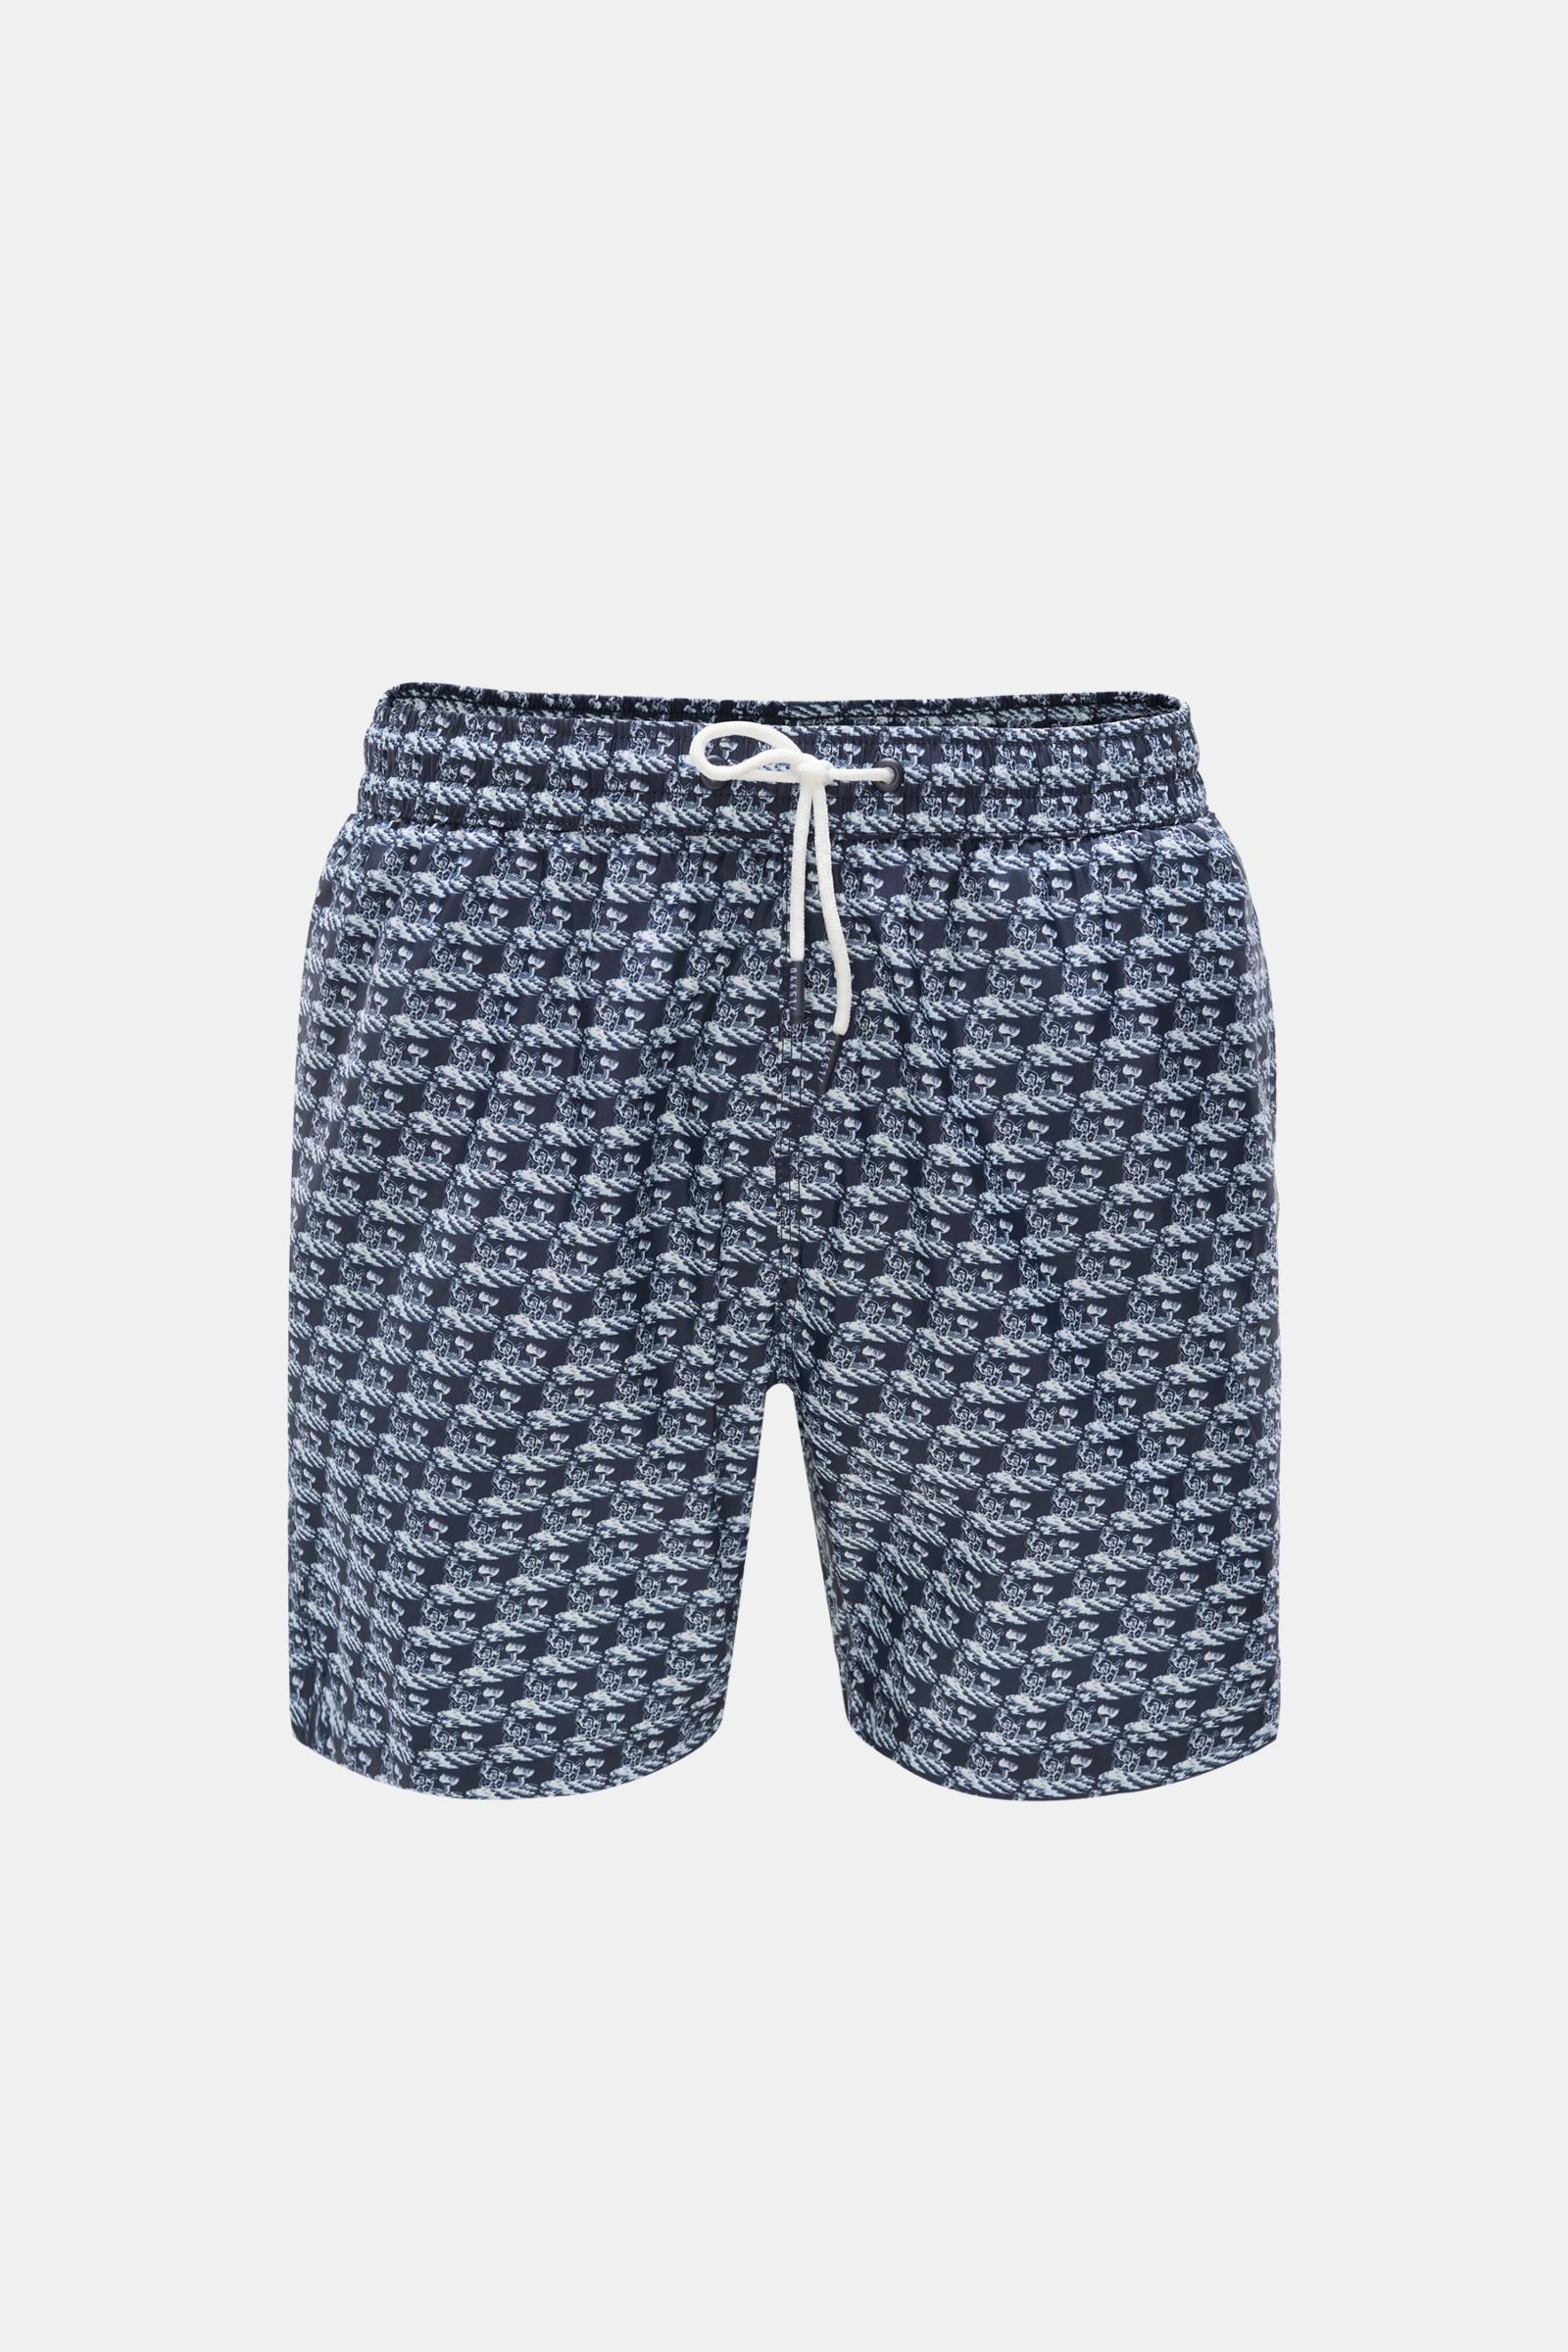 Swim shorts 'Neptun Swim' navy/white patterned